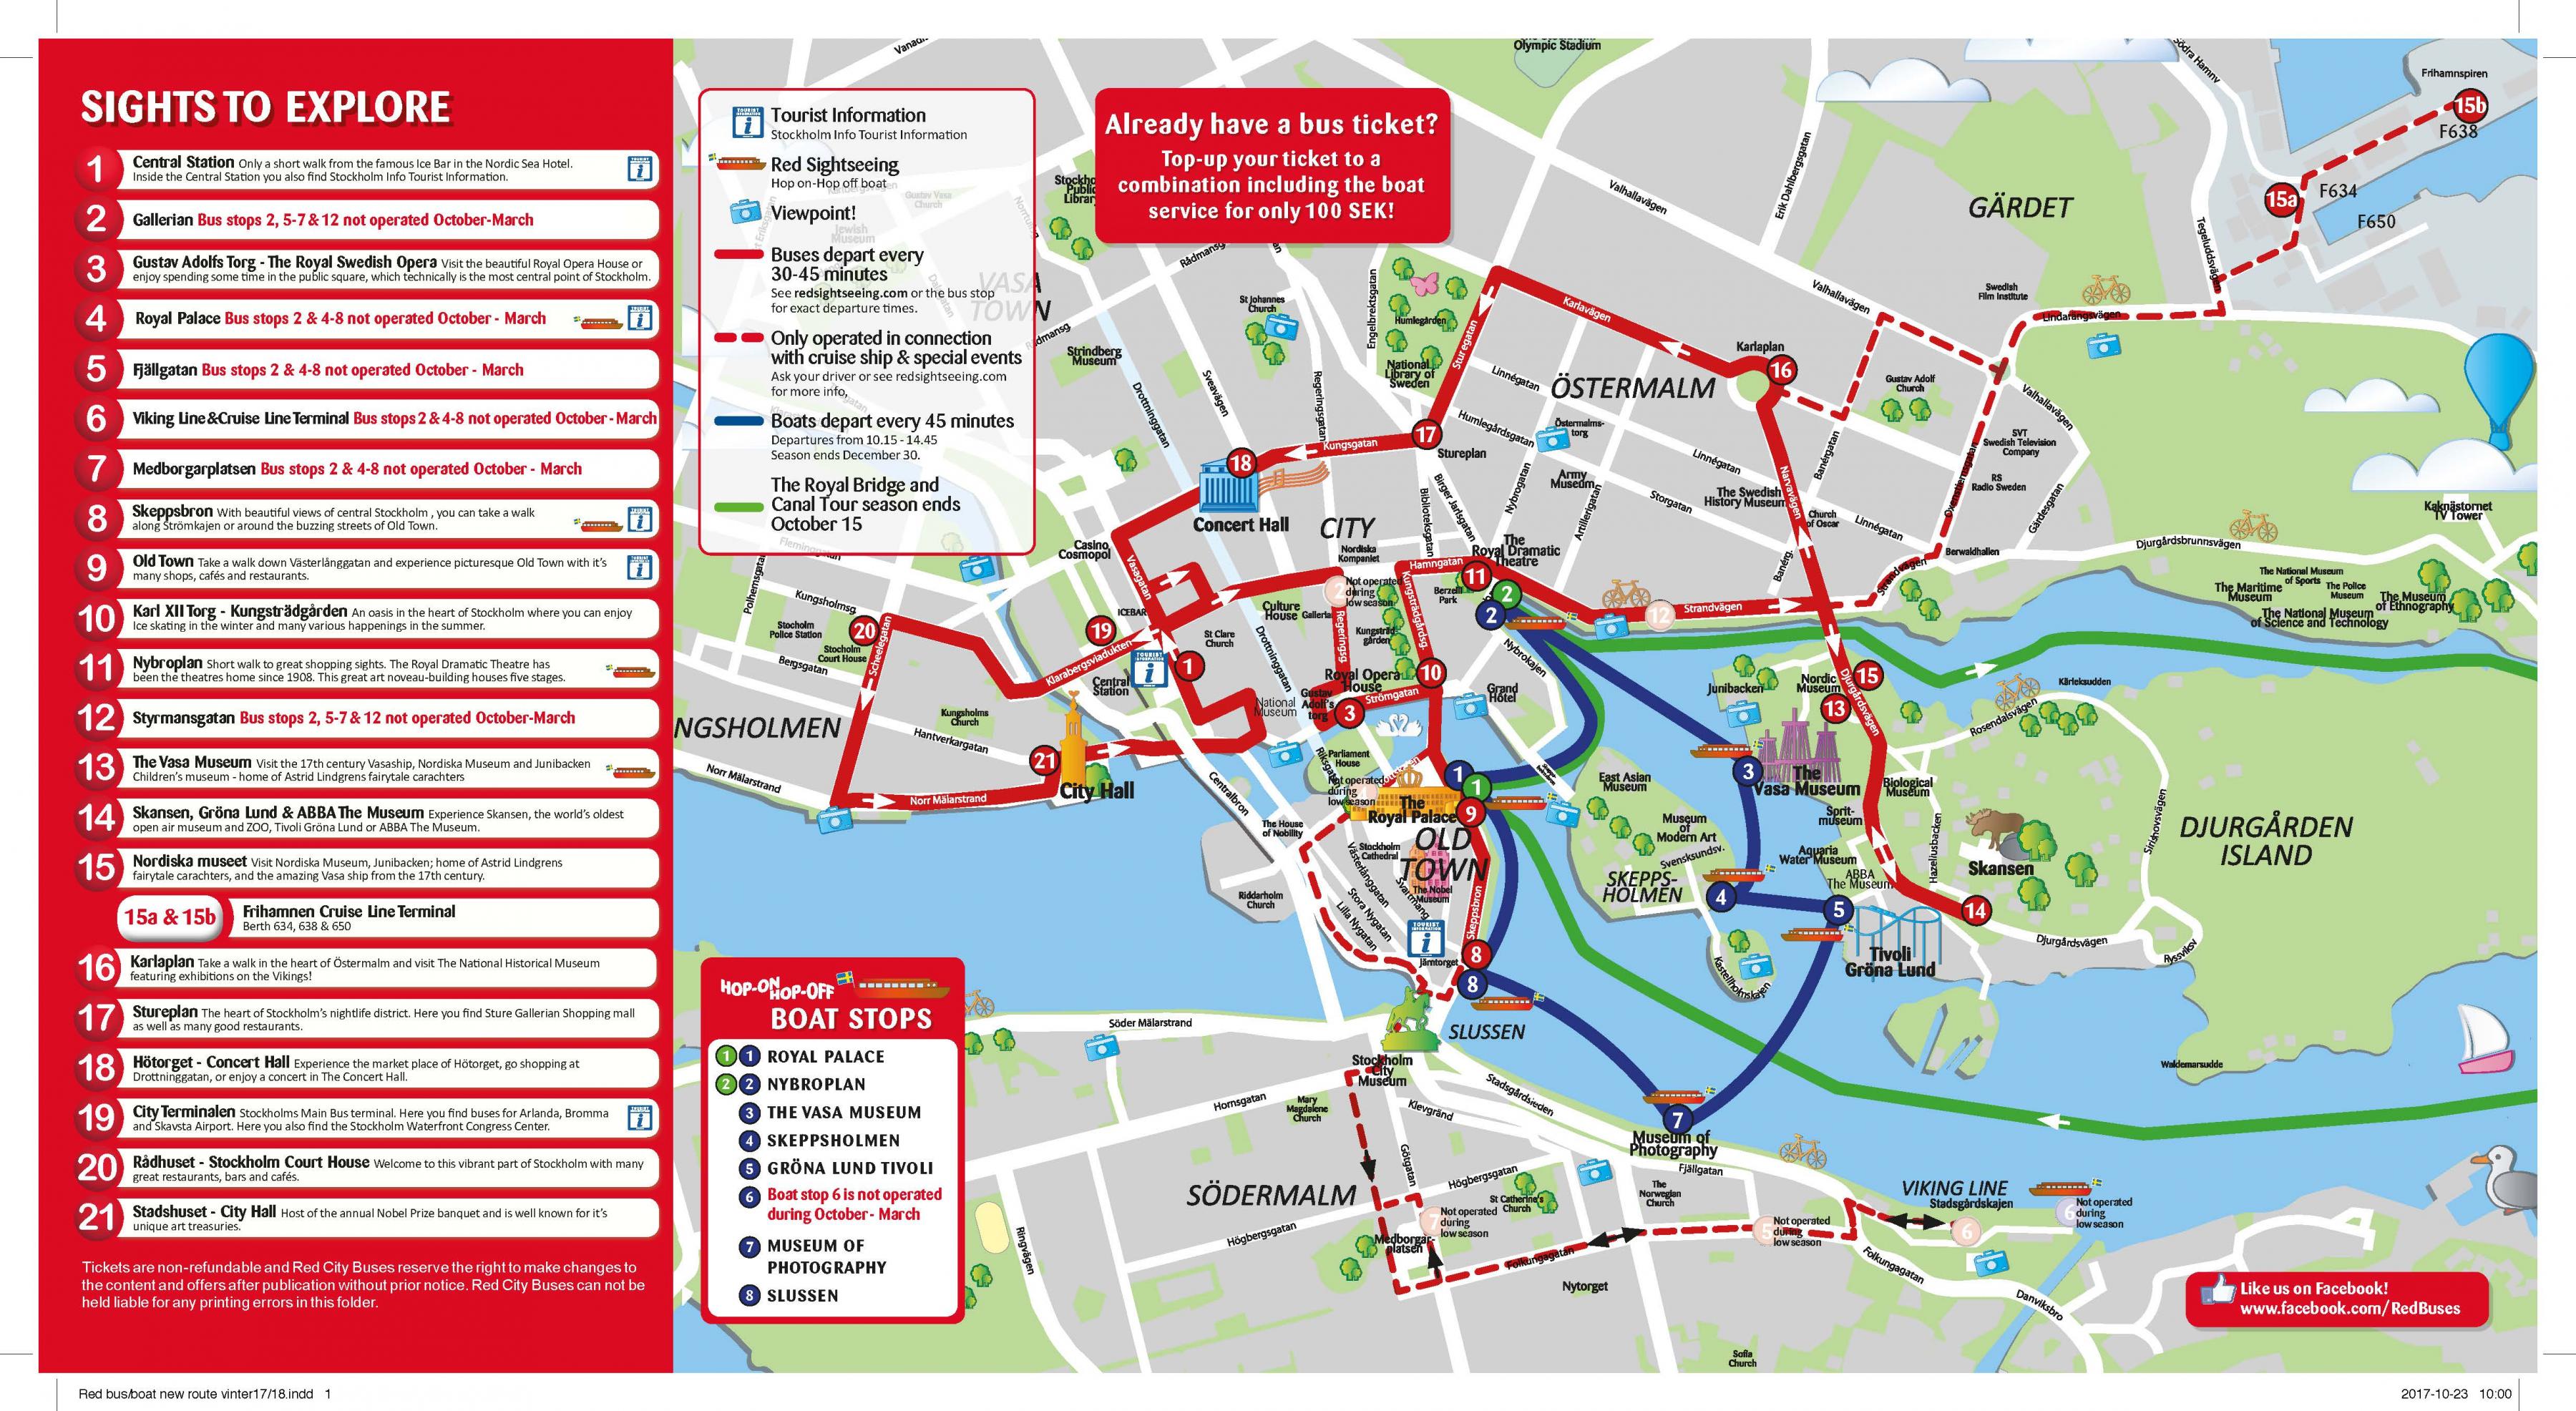 Stockholm hop off bus route map - Stockholm red bus and Uppland - Sweden)